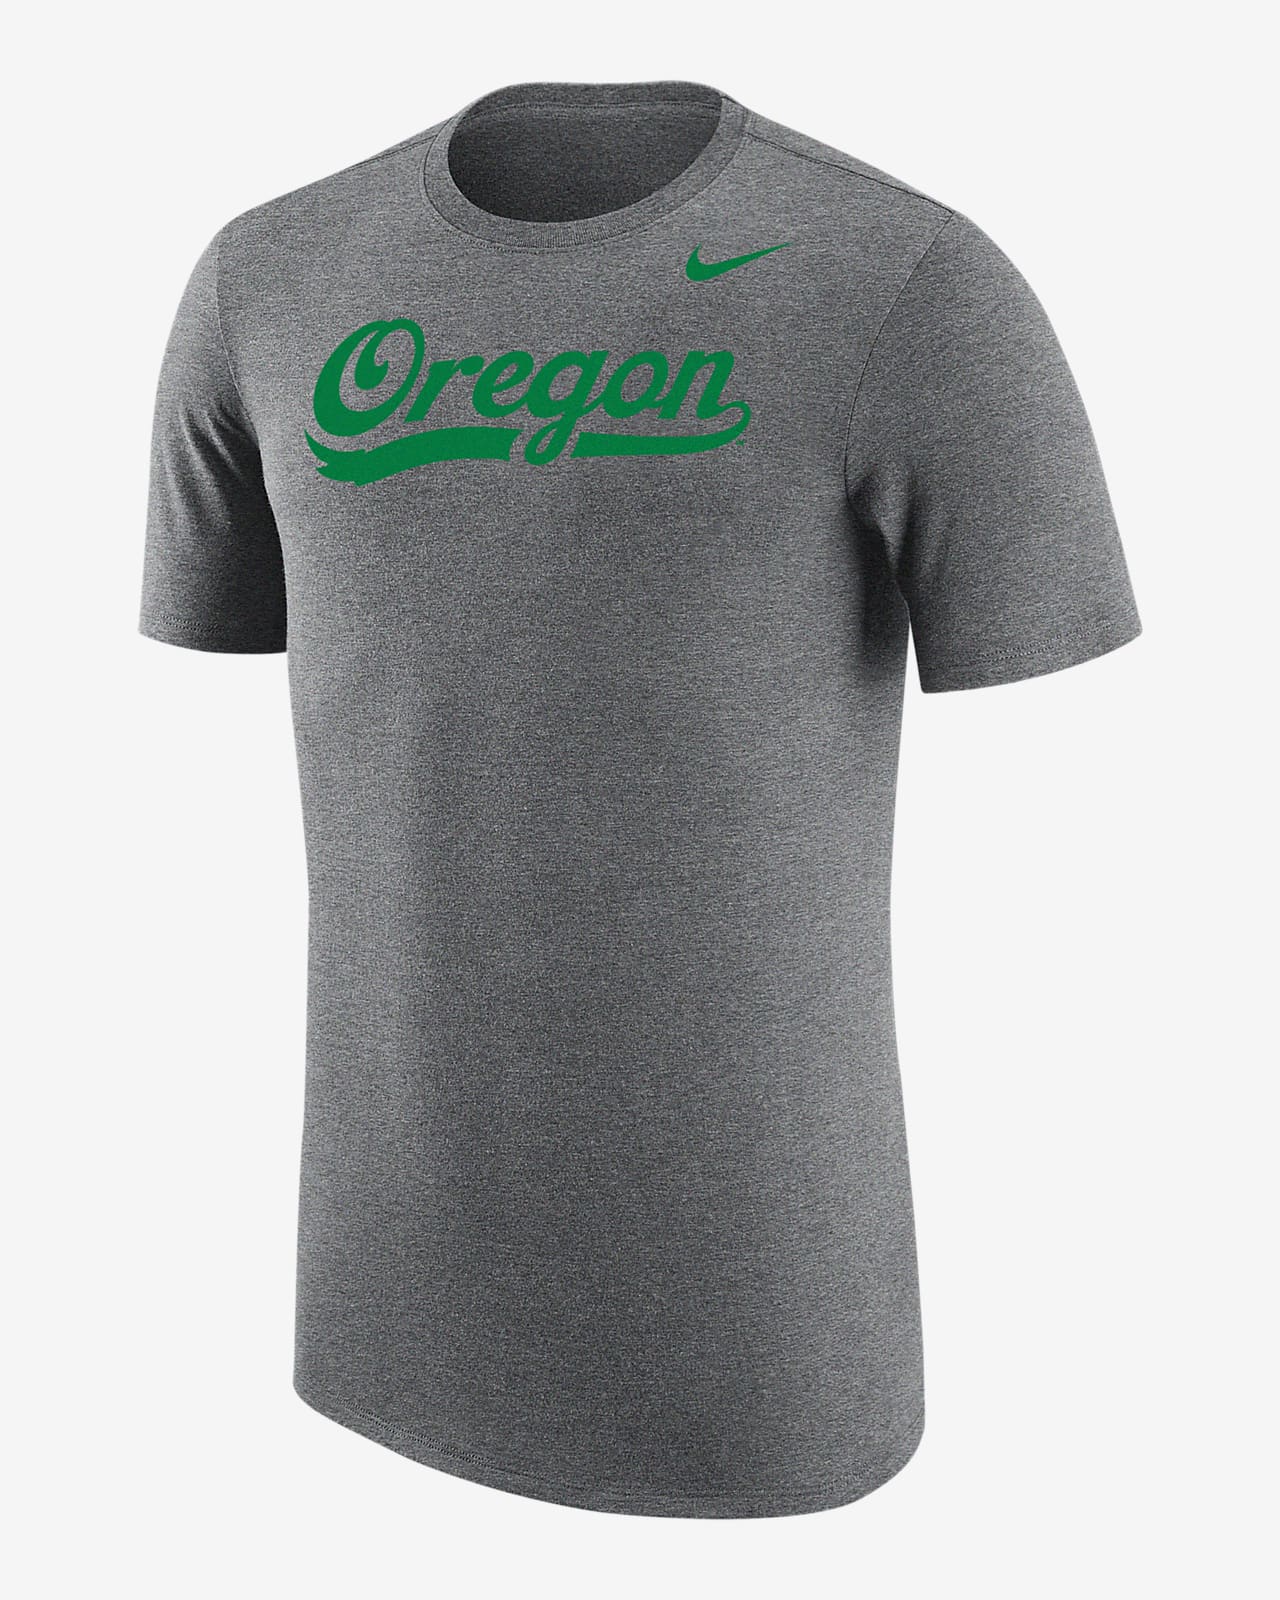 Playera universitaria Nike para hombre Oregon